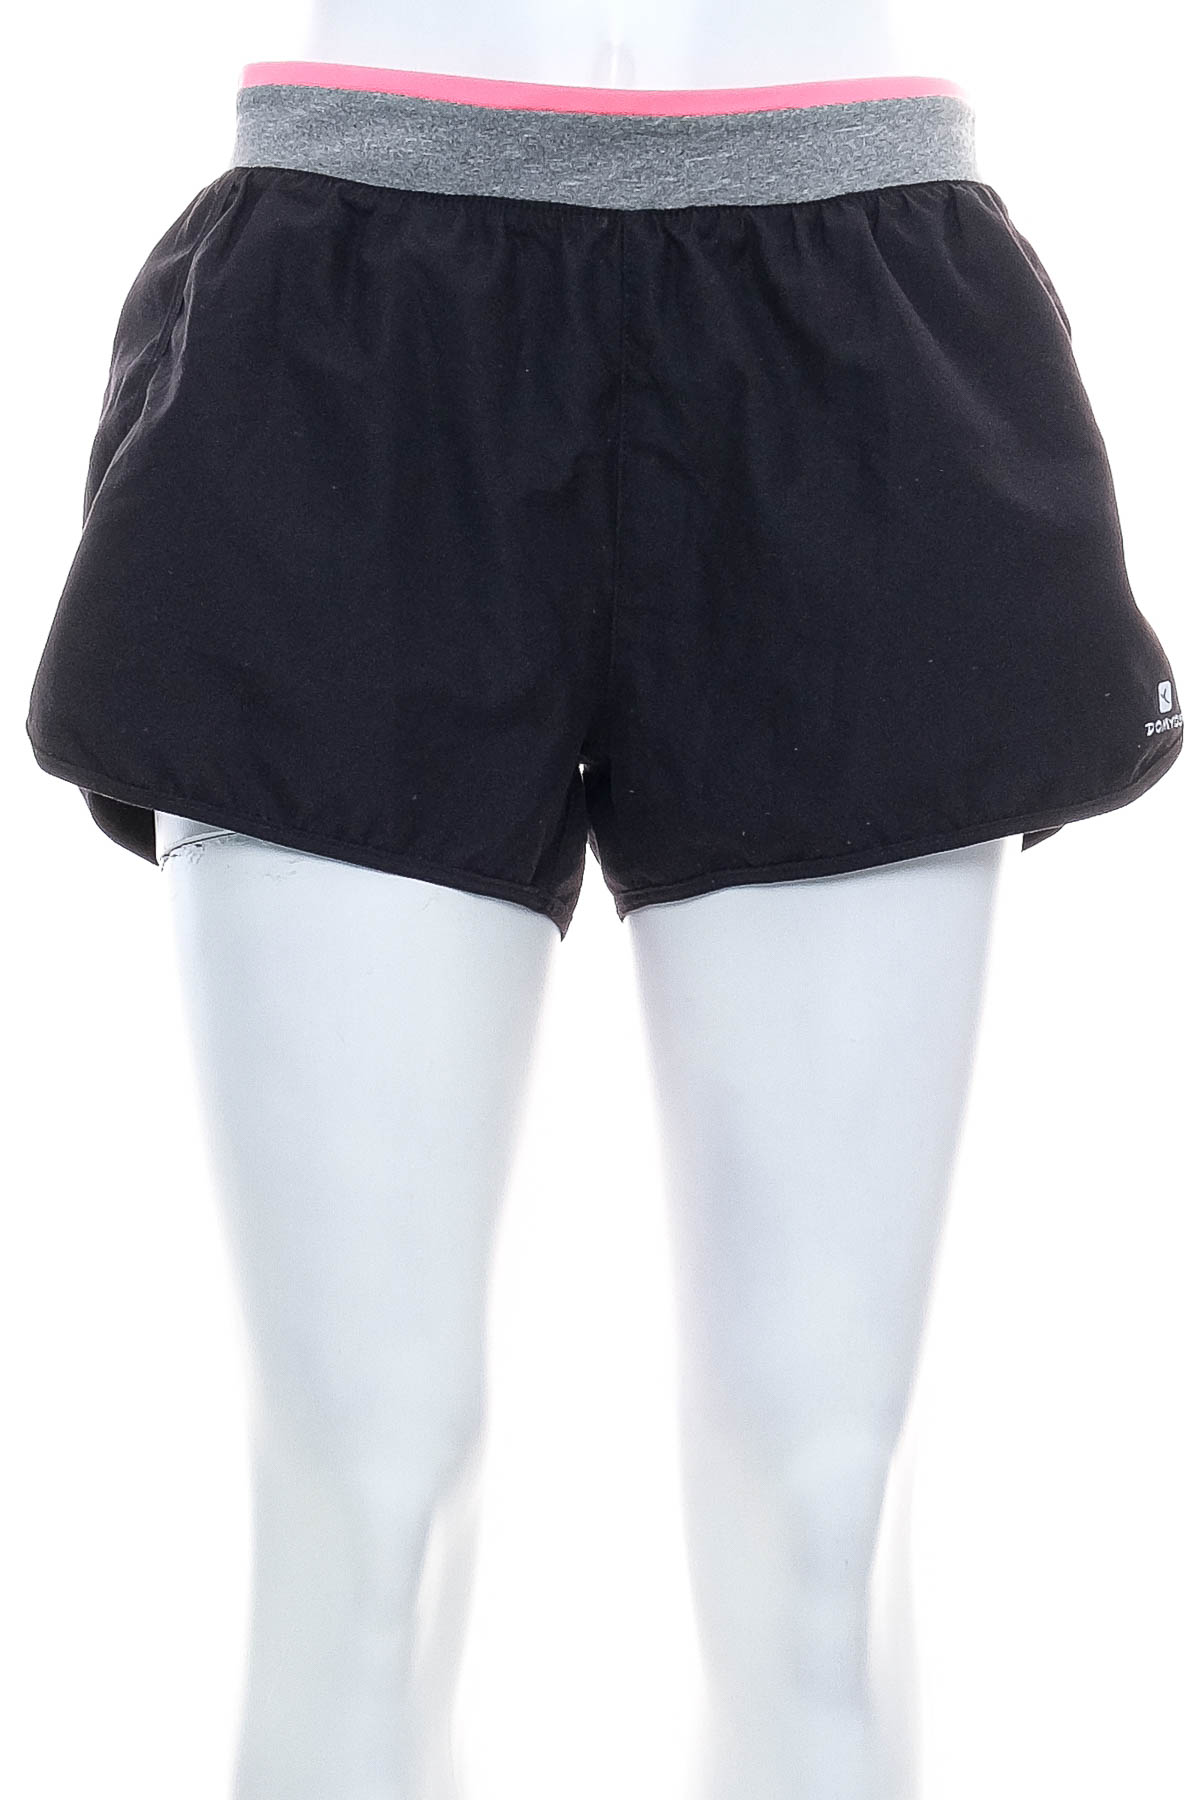 Women's shorts - Domyos - 0